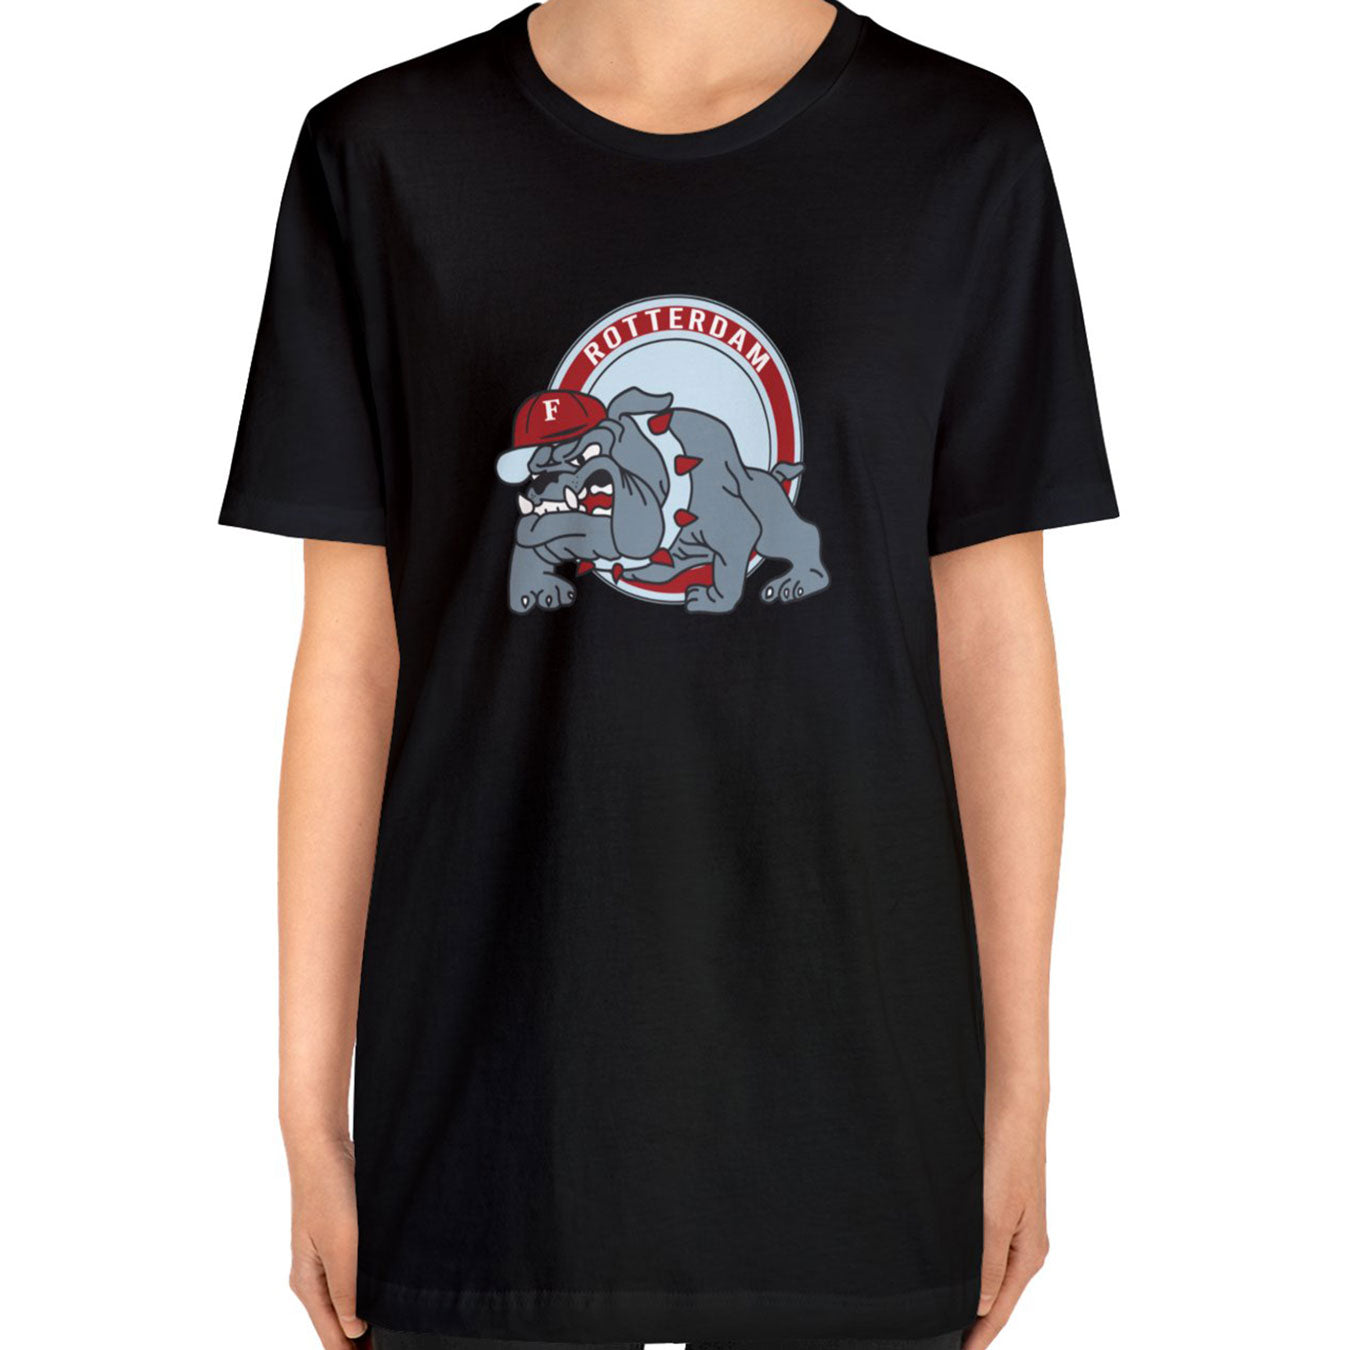 Feyenoord bull dog op zwart t-shirt